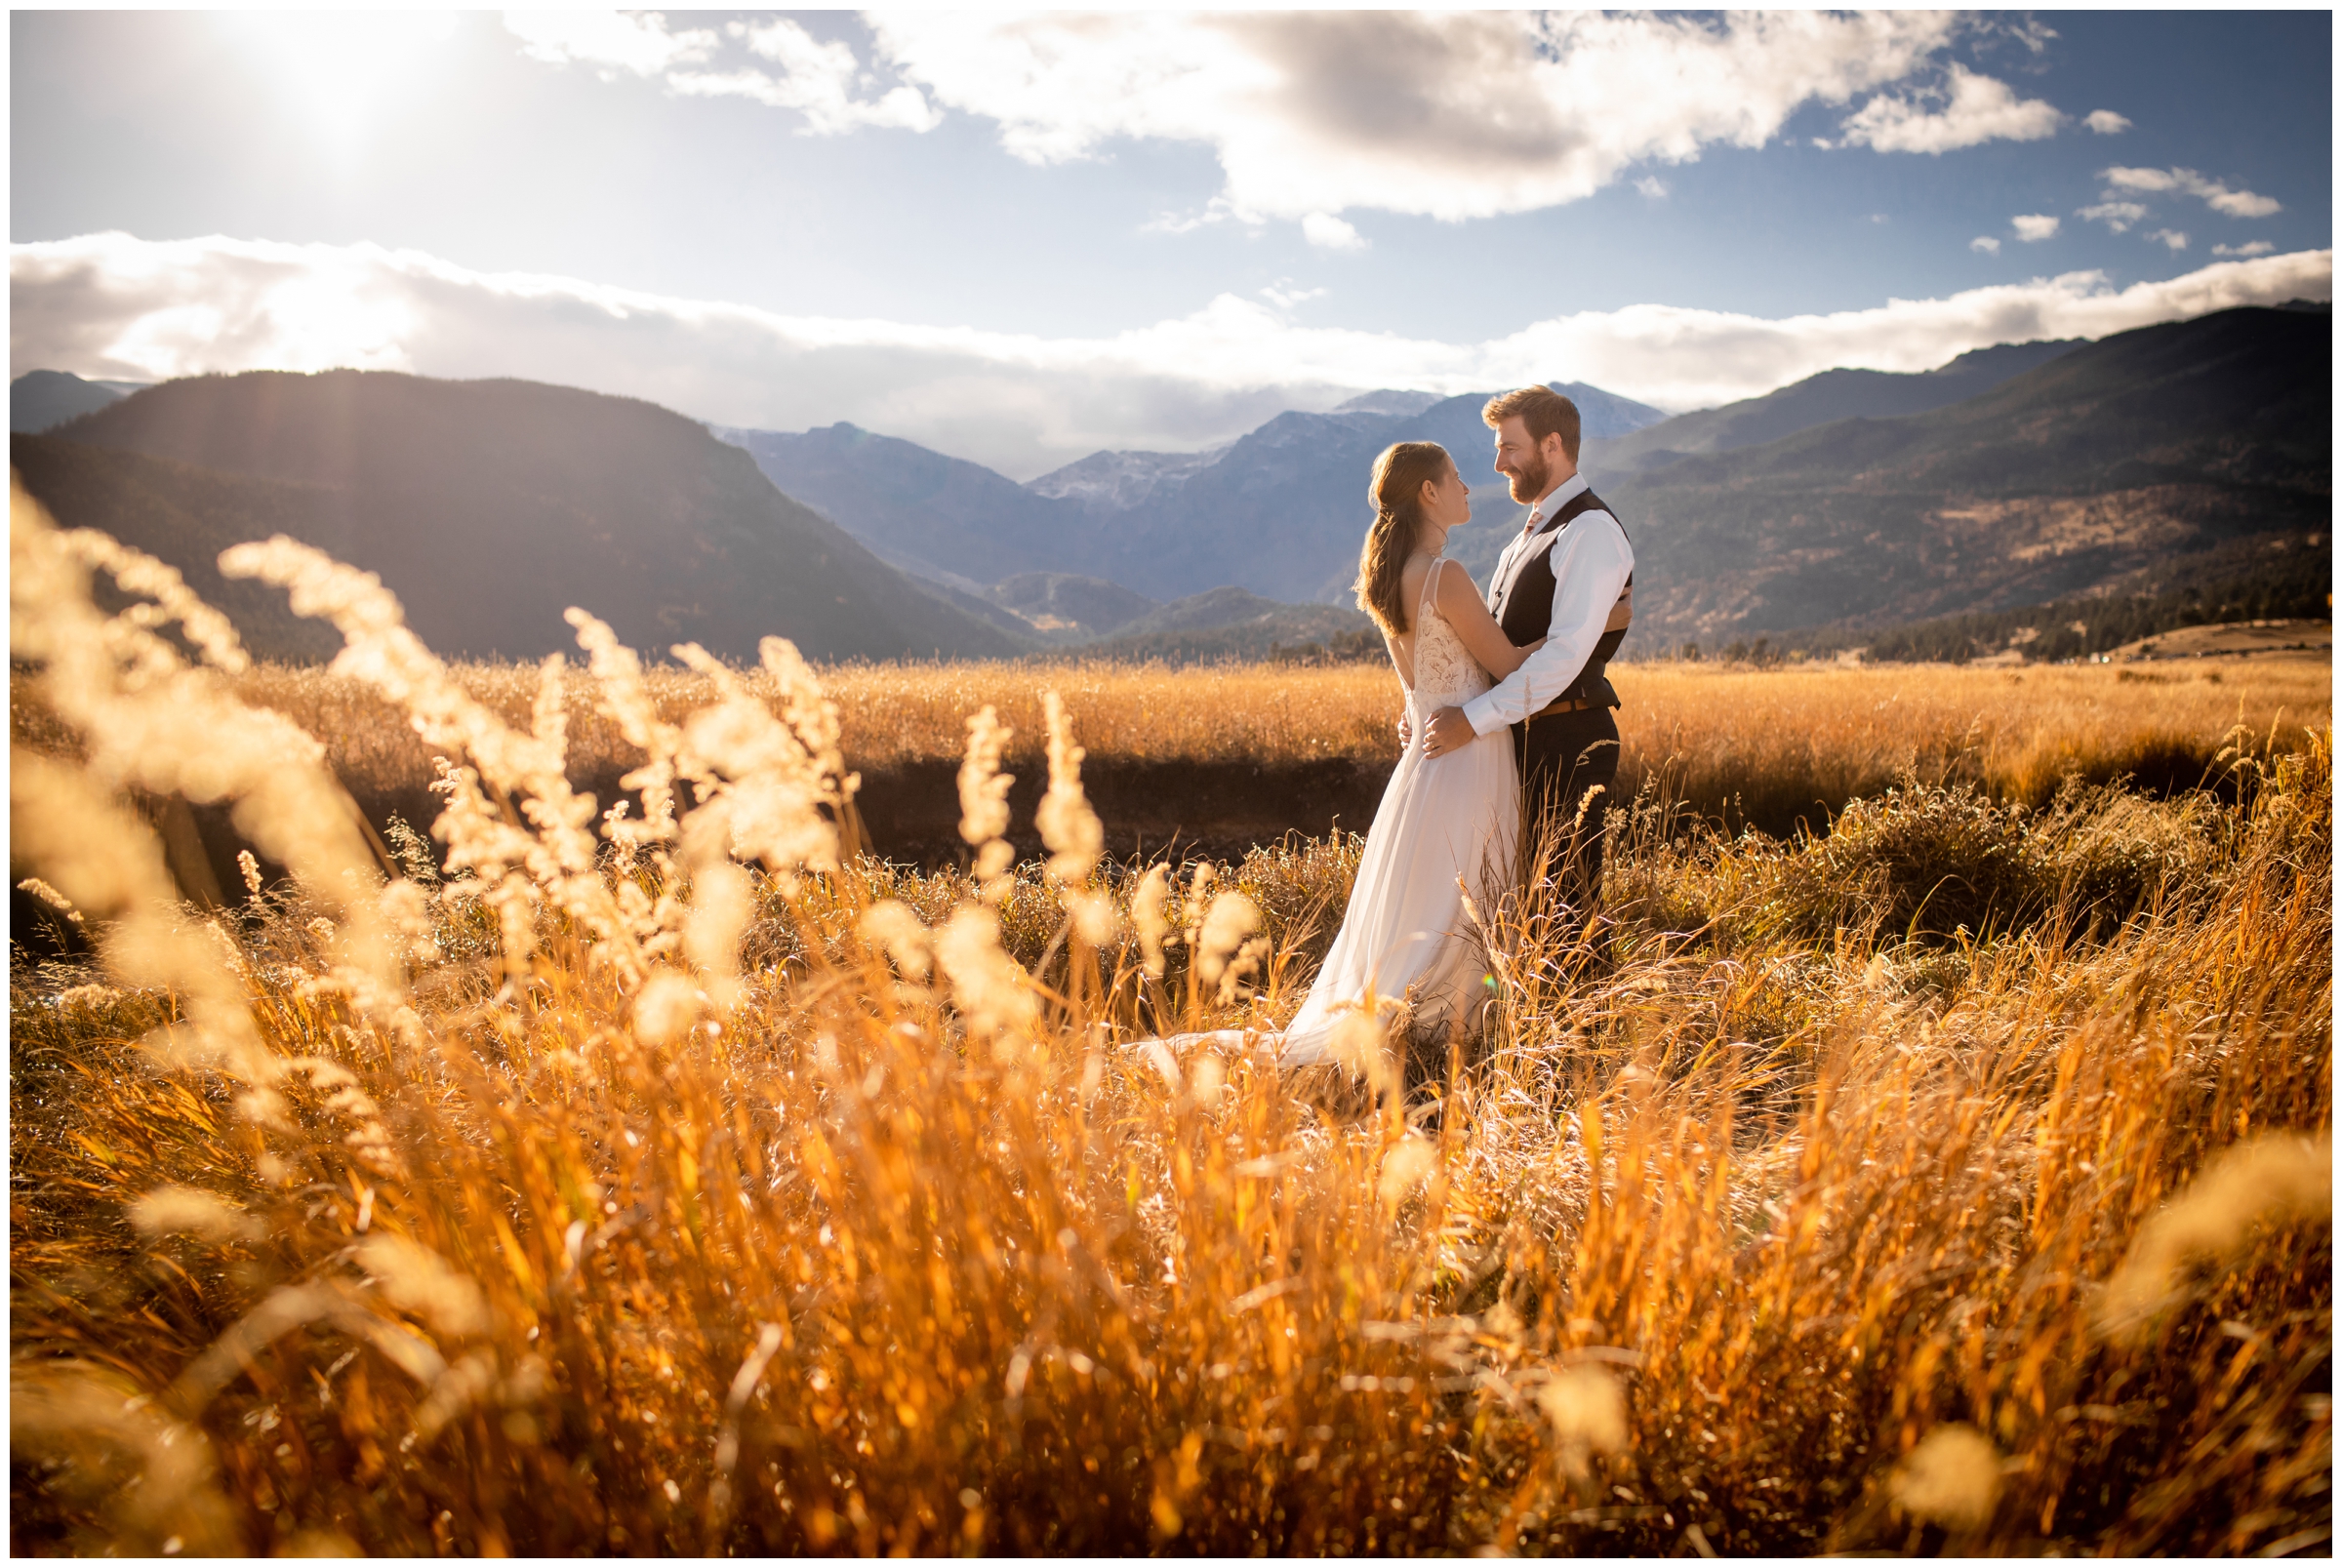 RMNP wedding photos during fall at Moraine Park by Estes Park Colorado photographer Plum Pretty Photography